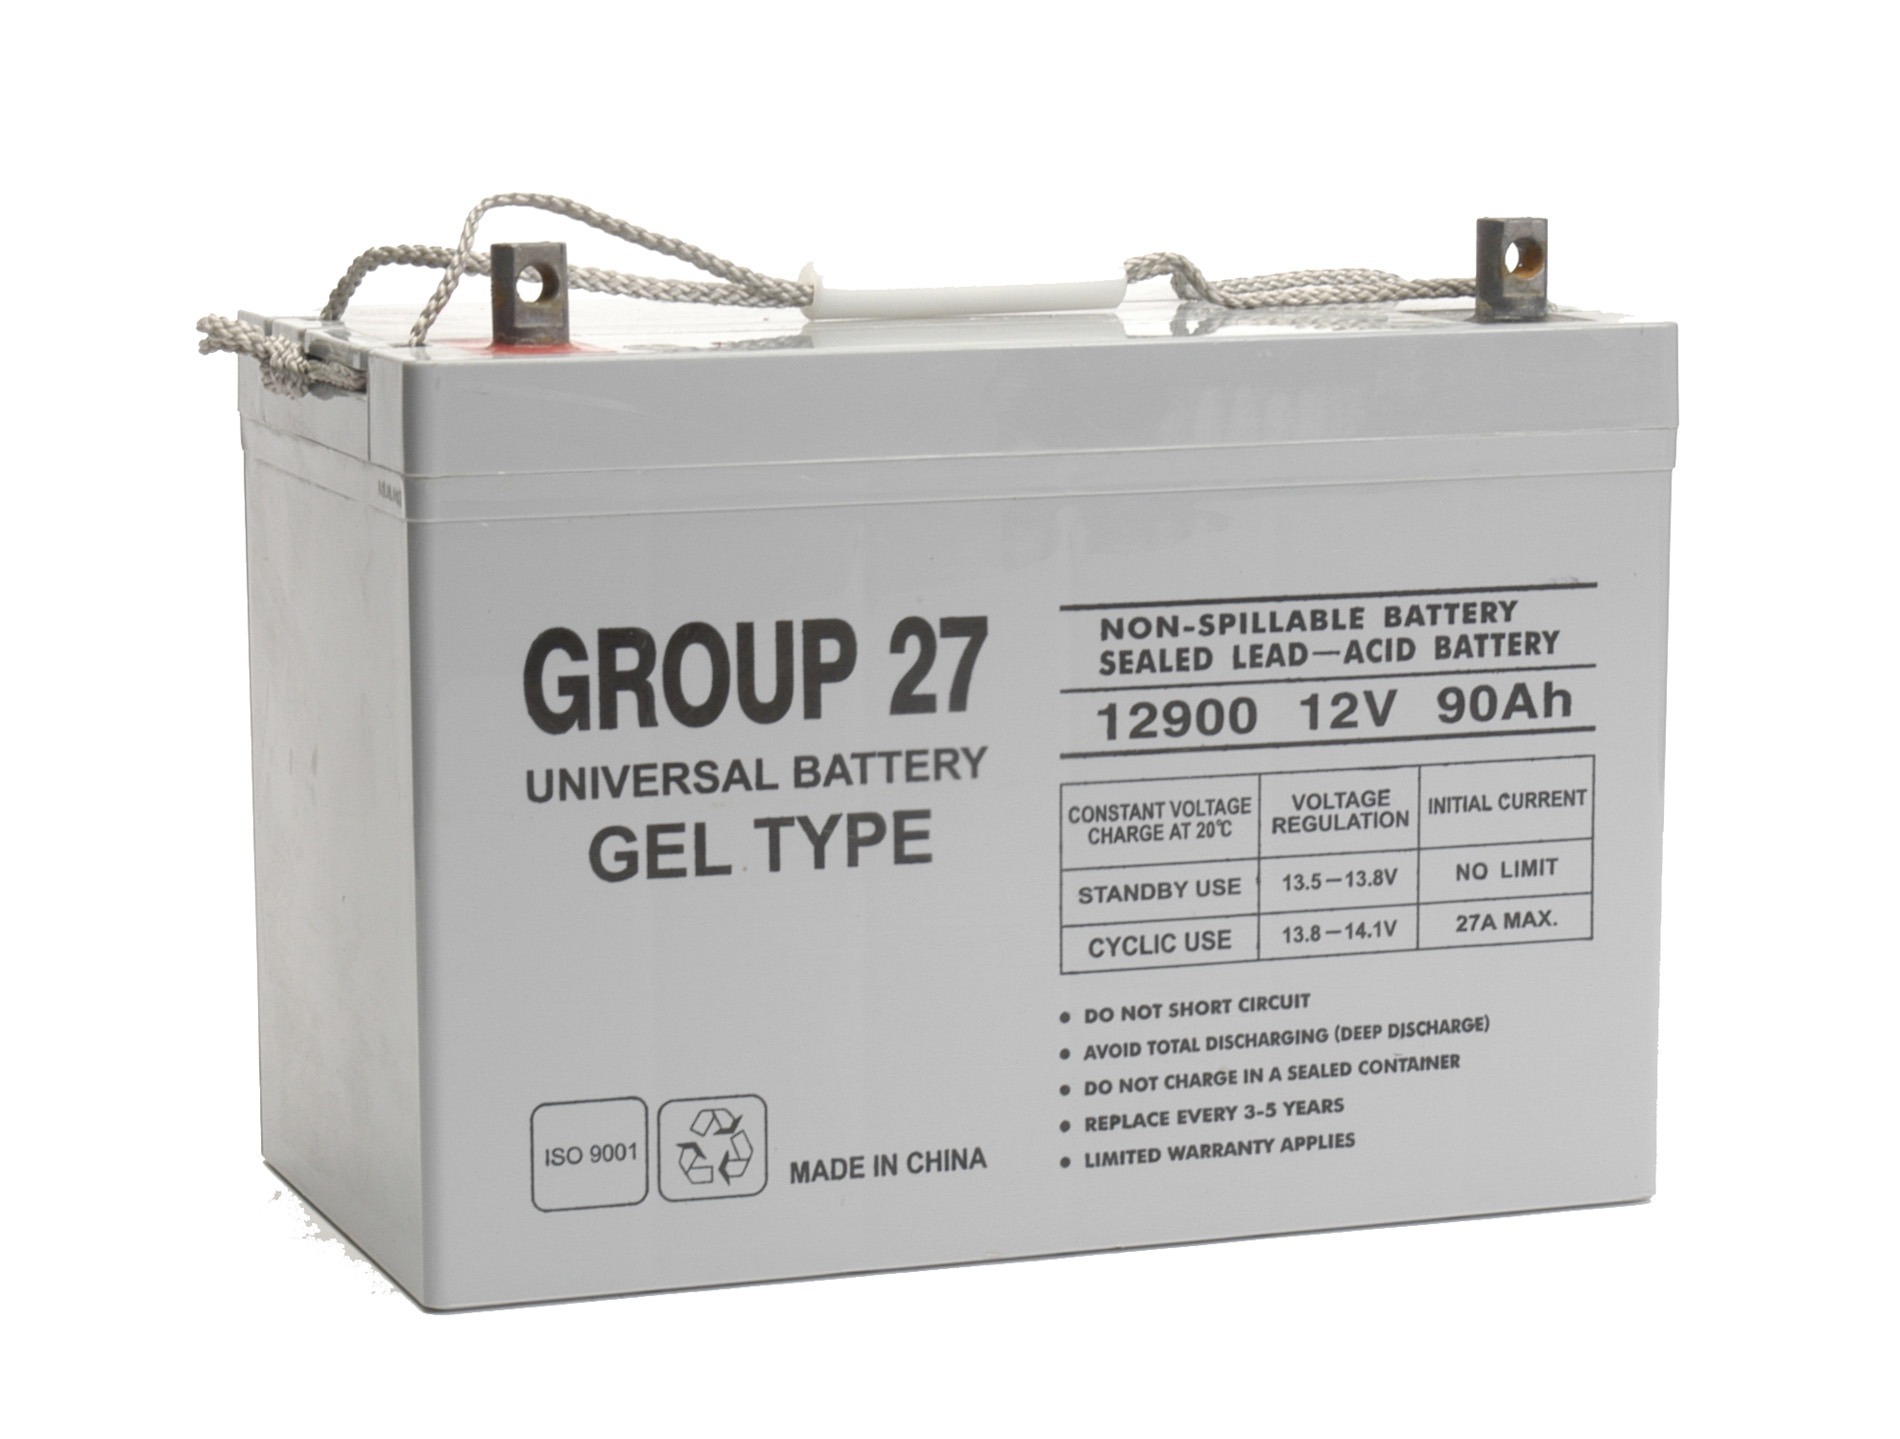 Sealed battery. Gel Battery. Аккумулятор для ДГУ Urban Battery 12v 90ah. Gel 12-85. Non-Spillable аккумулятор Liuu.